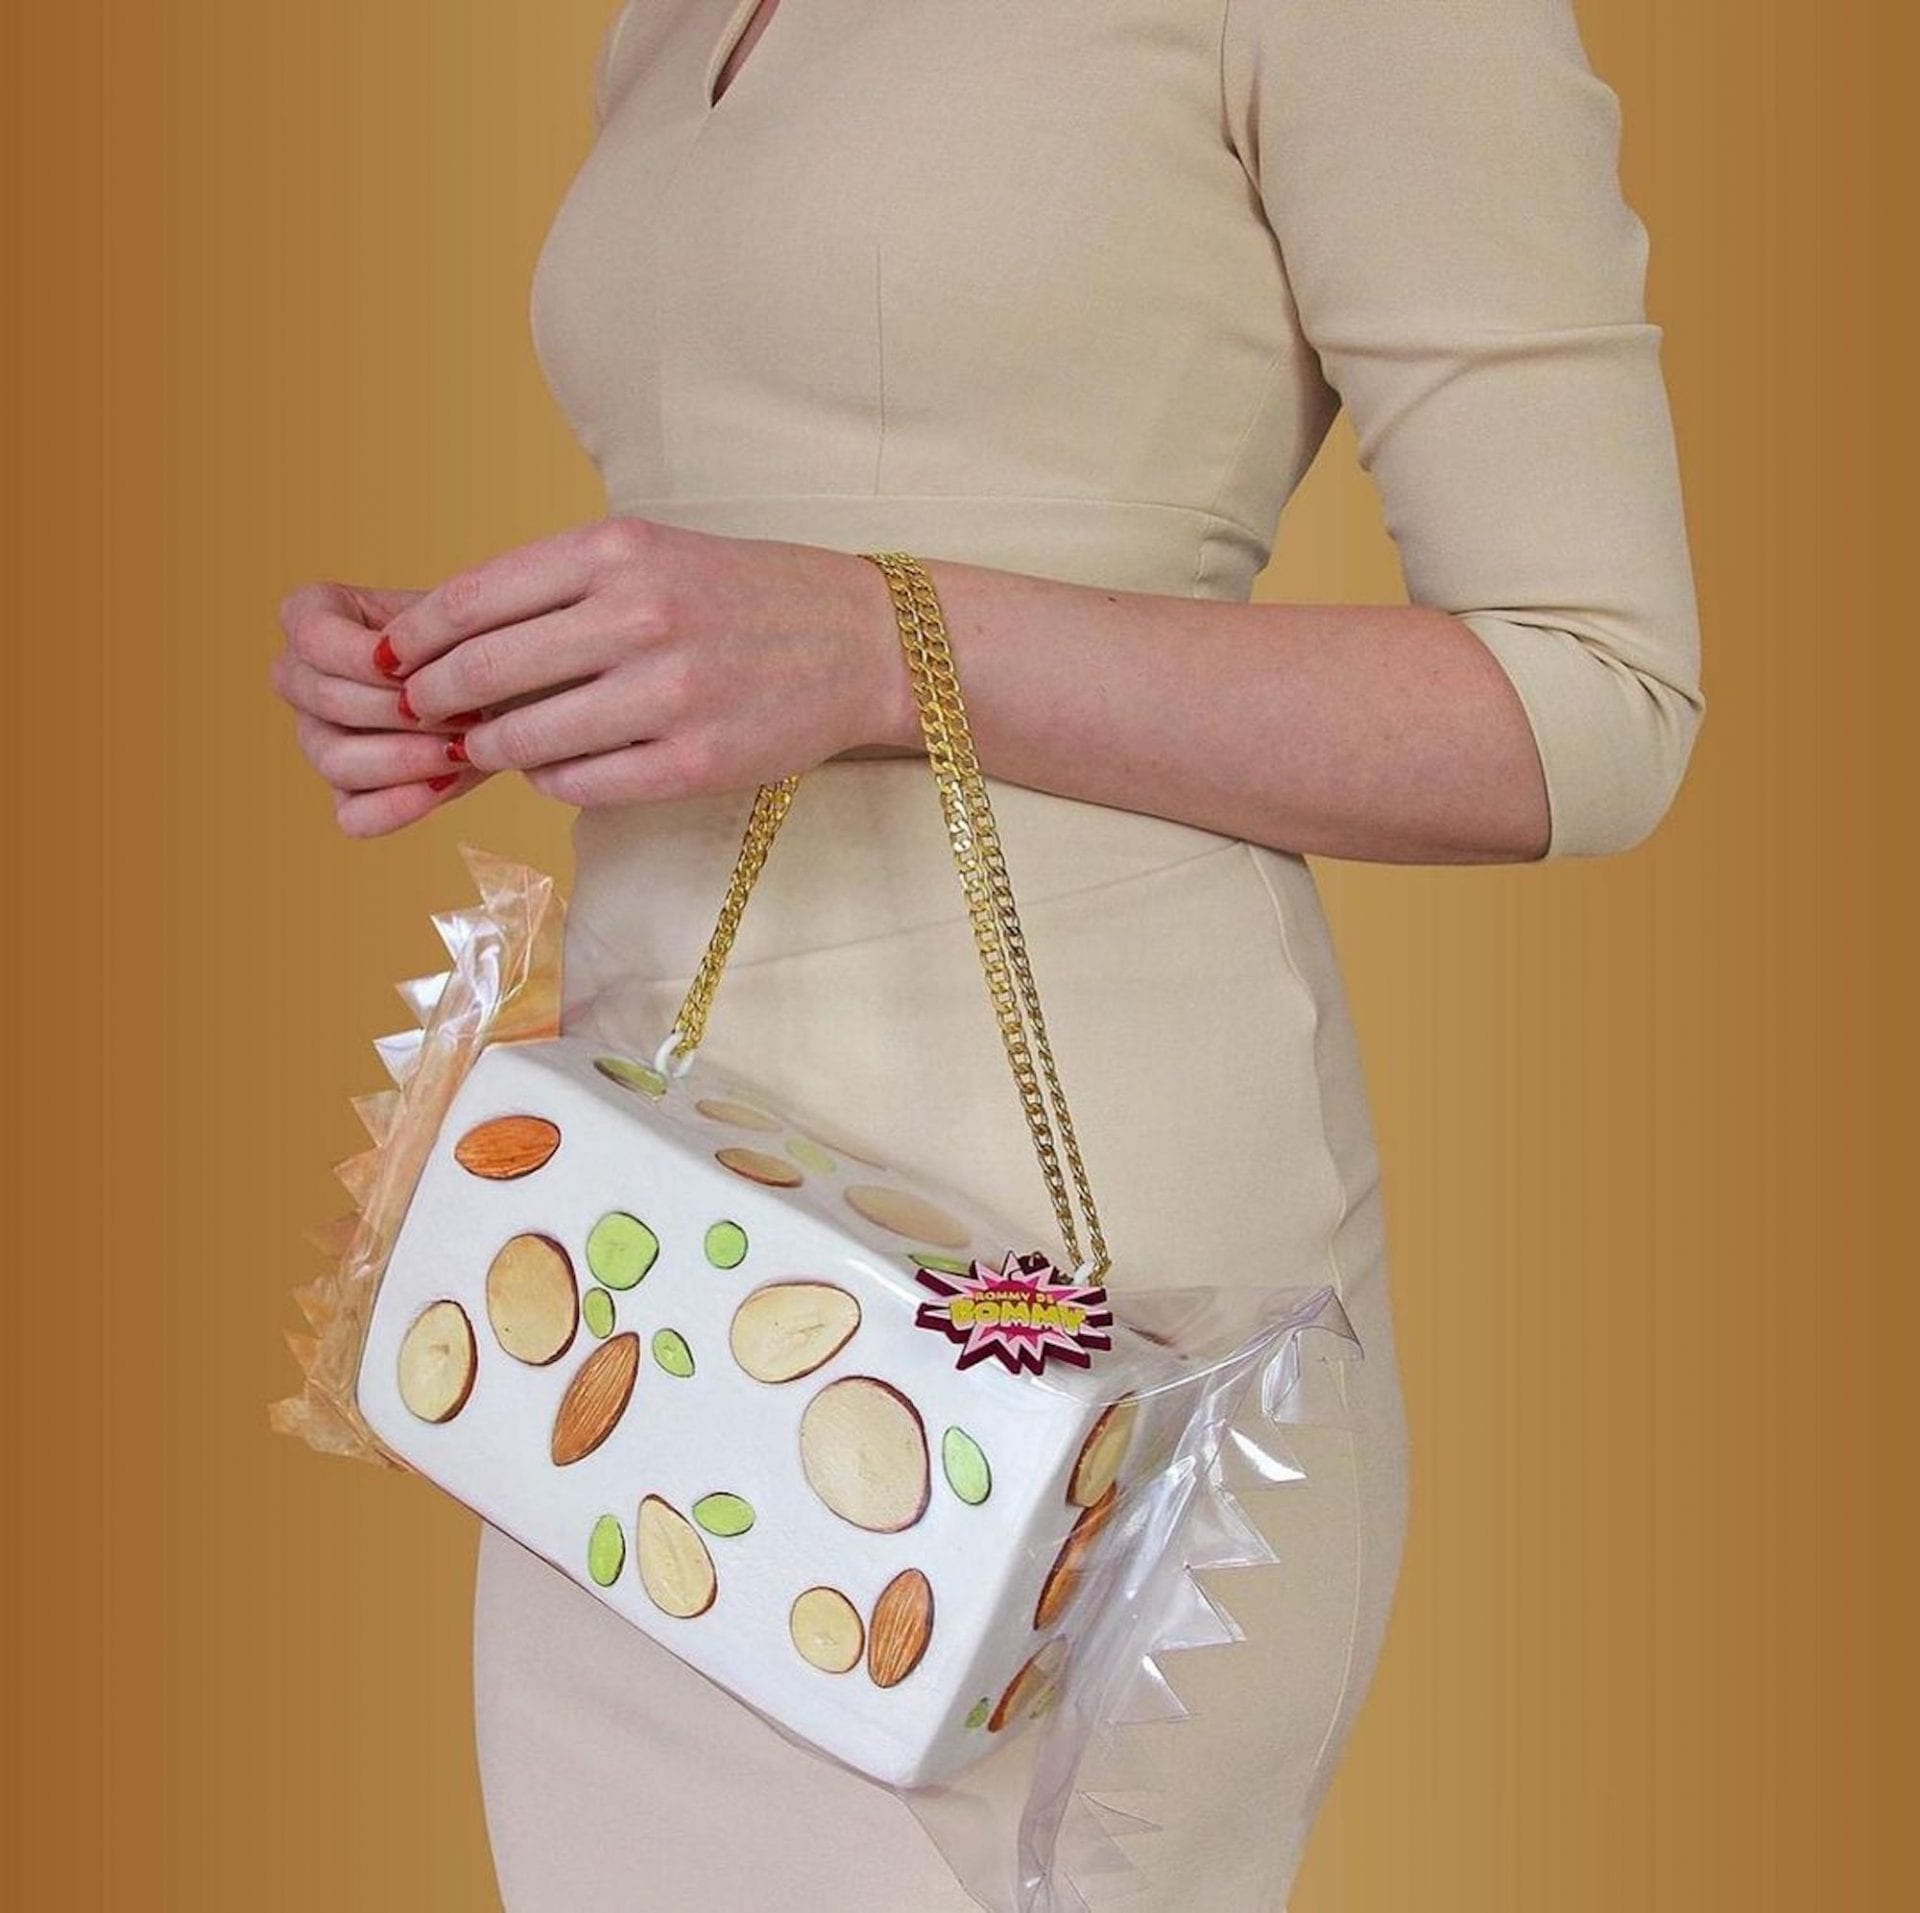 These incredibly realistic food purses : r/INEEEEDIT